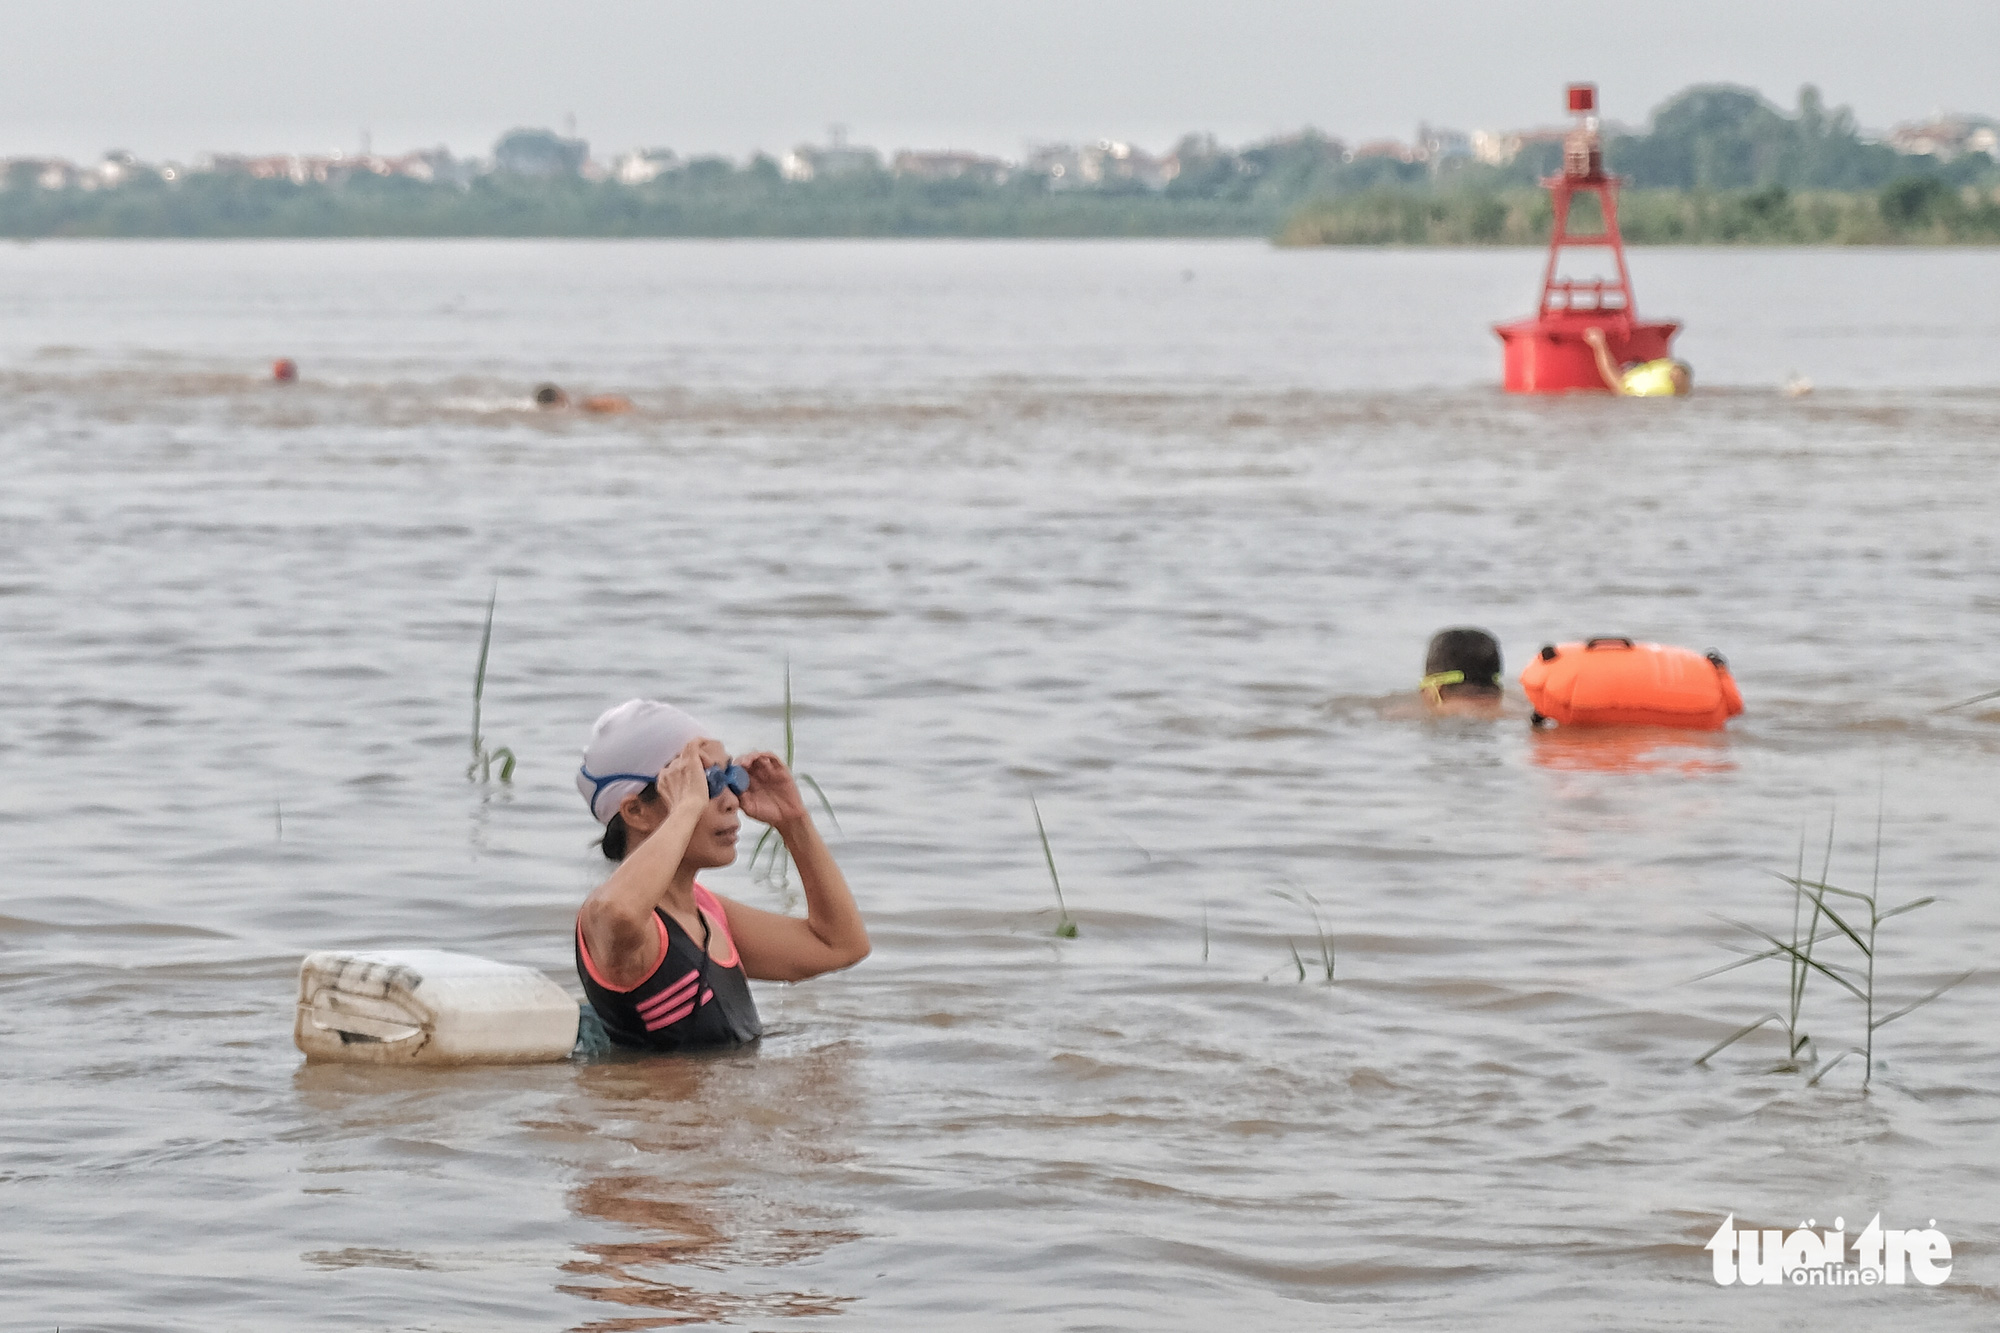 Hanoi residents swim in Red River despite rising water